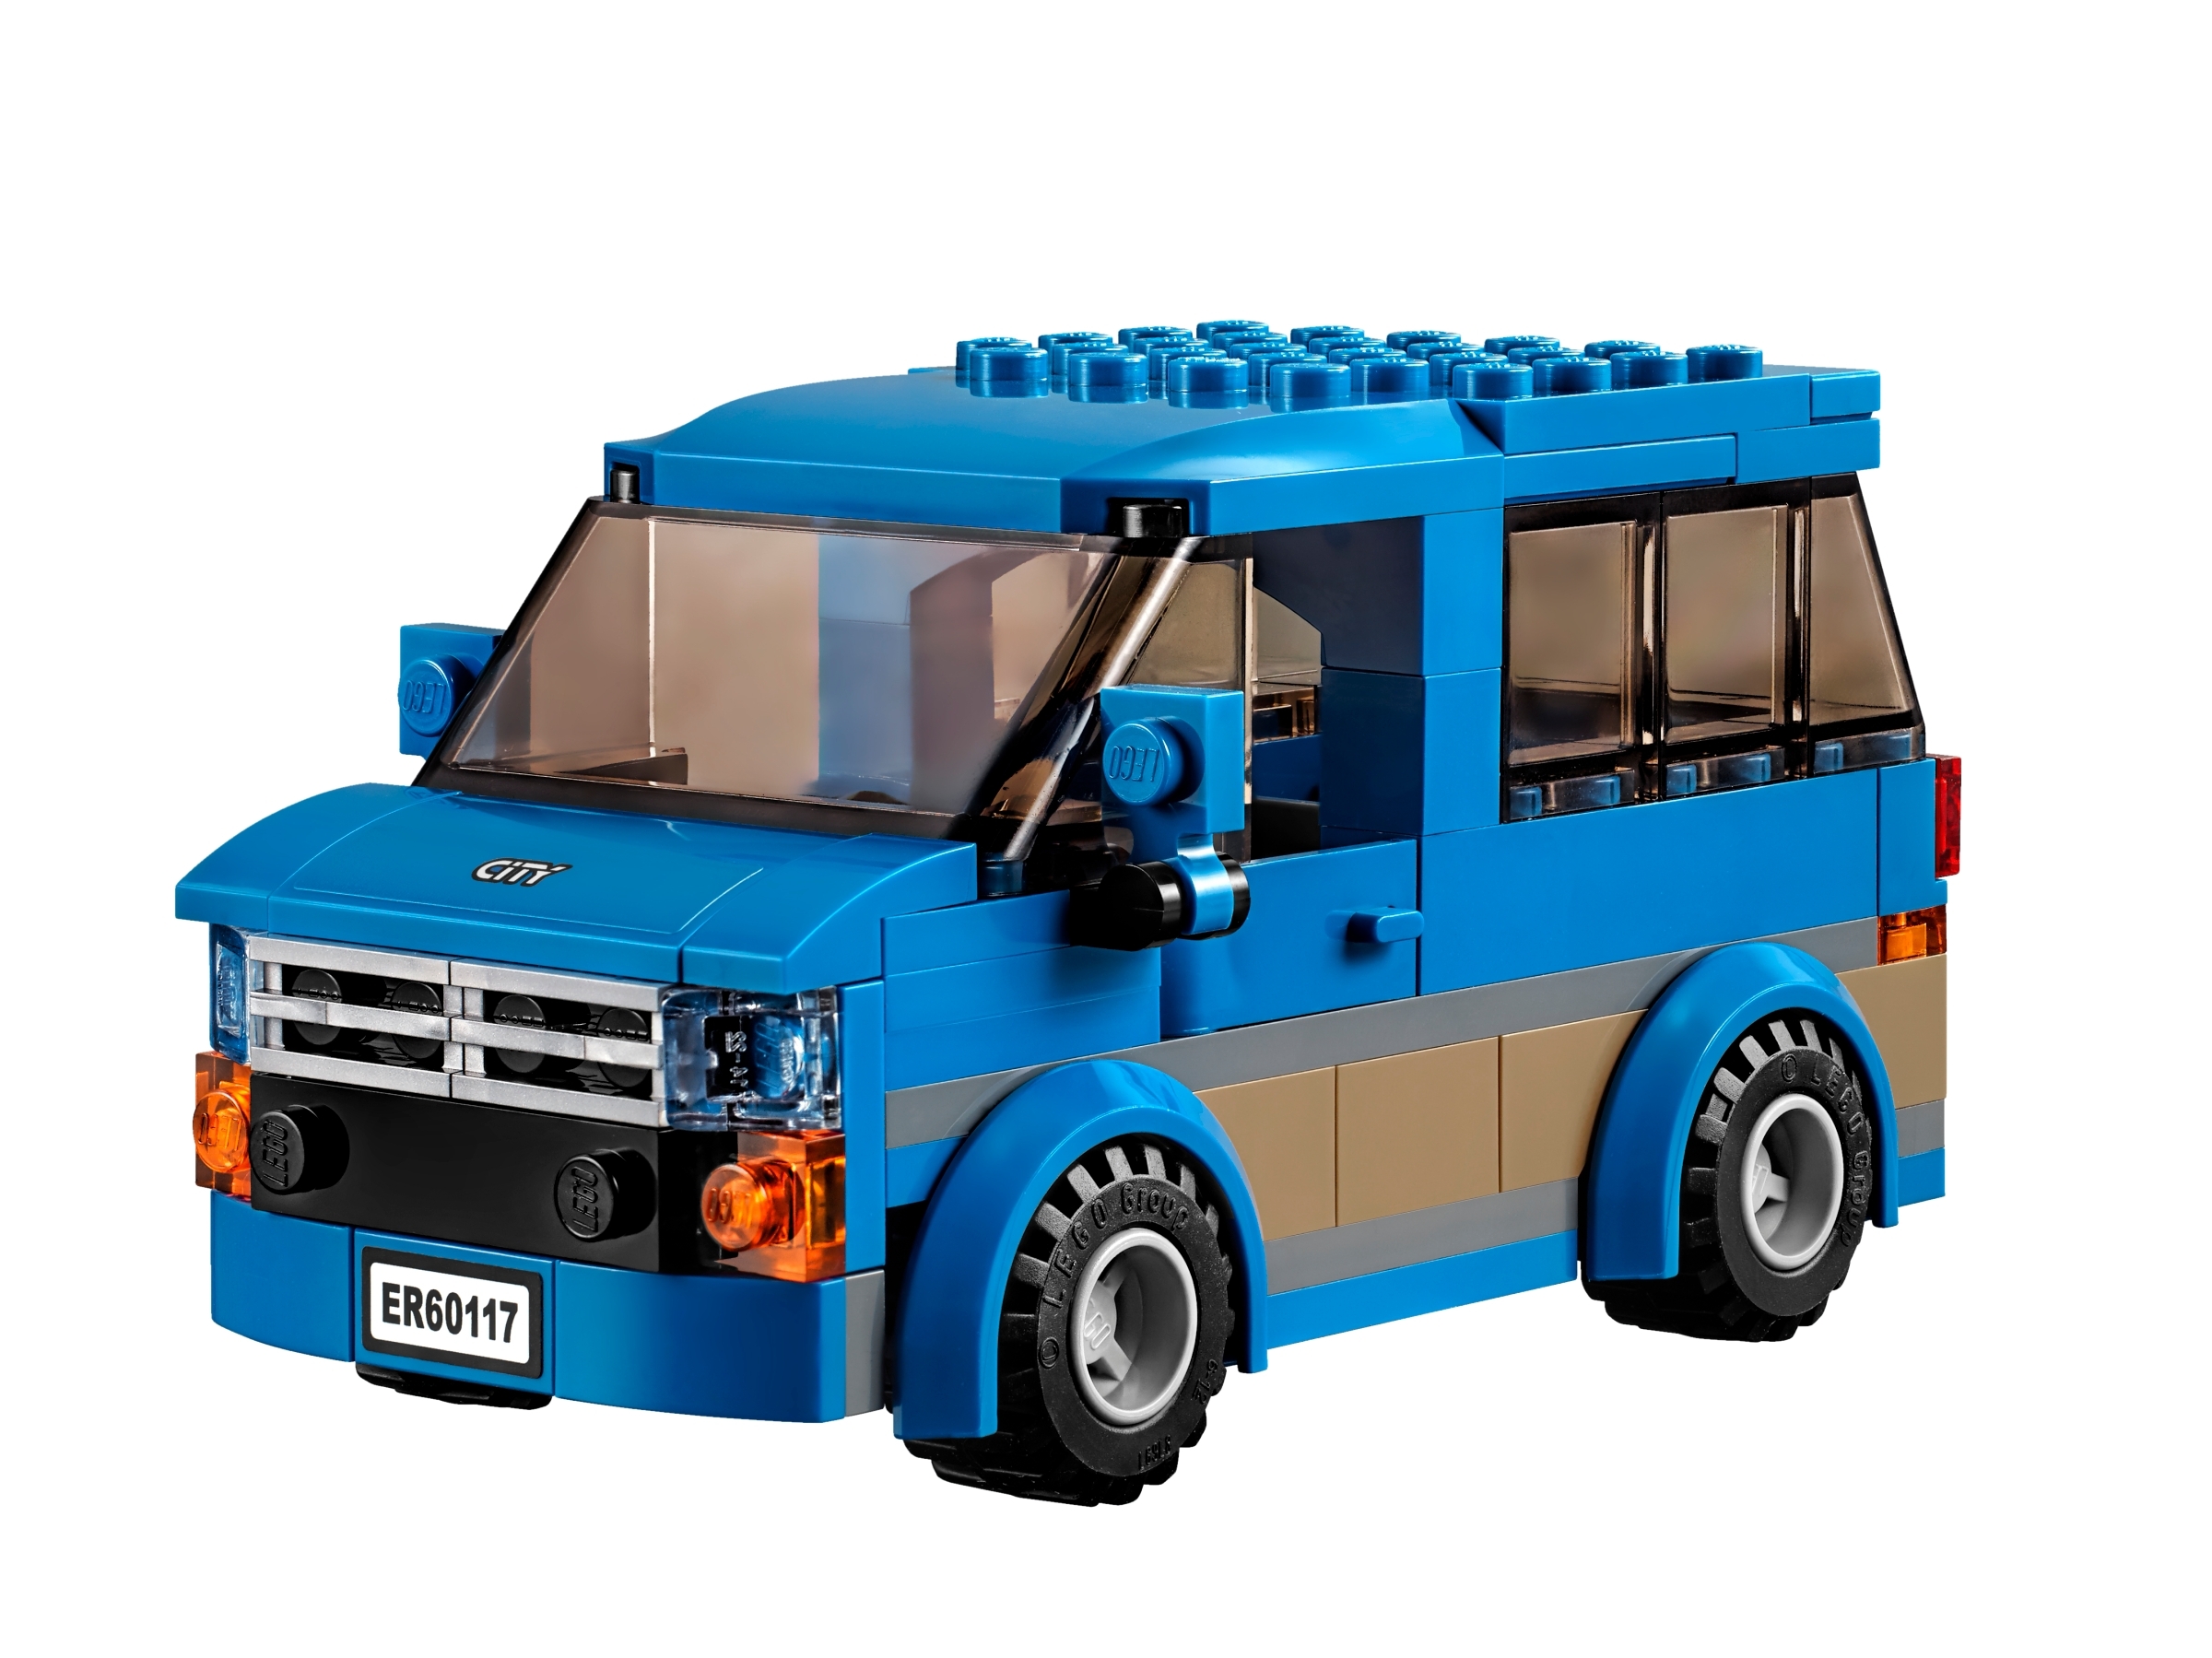 lego city van and caravan